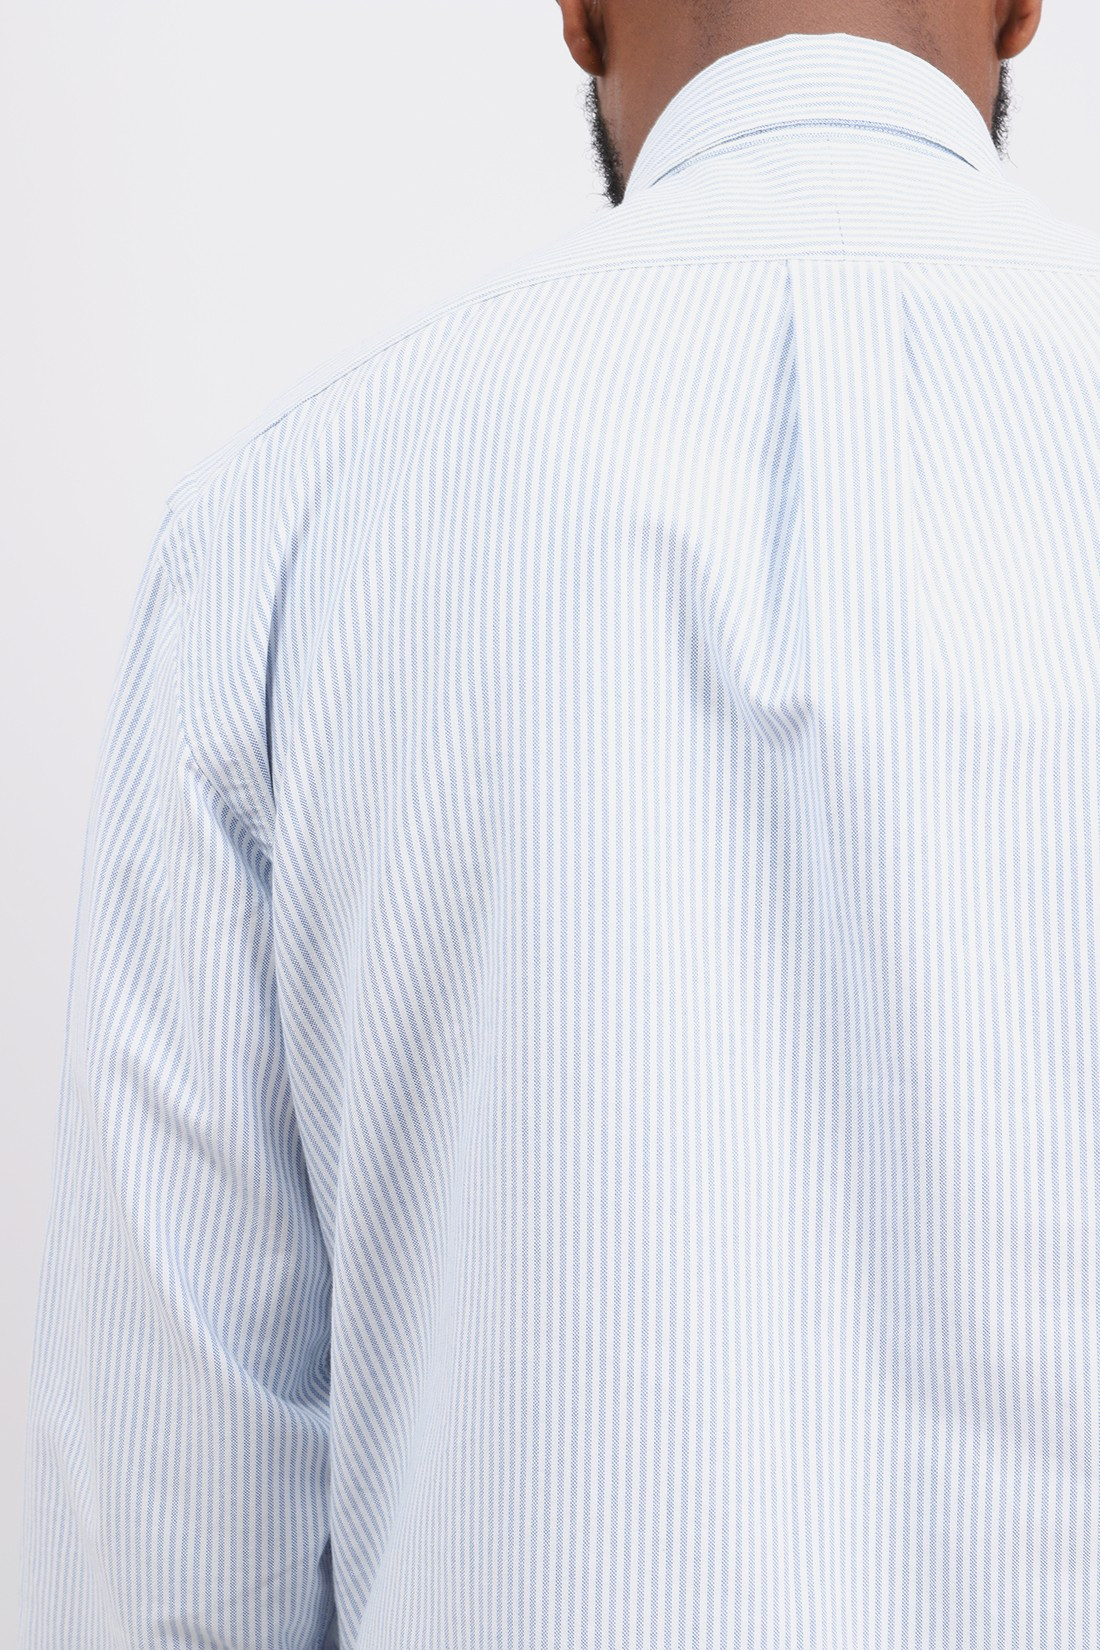 POLO RALPH LAUREN / Custom fit oxford shirt Stripe blue